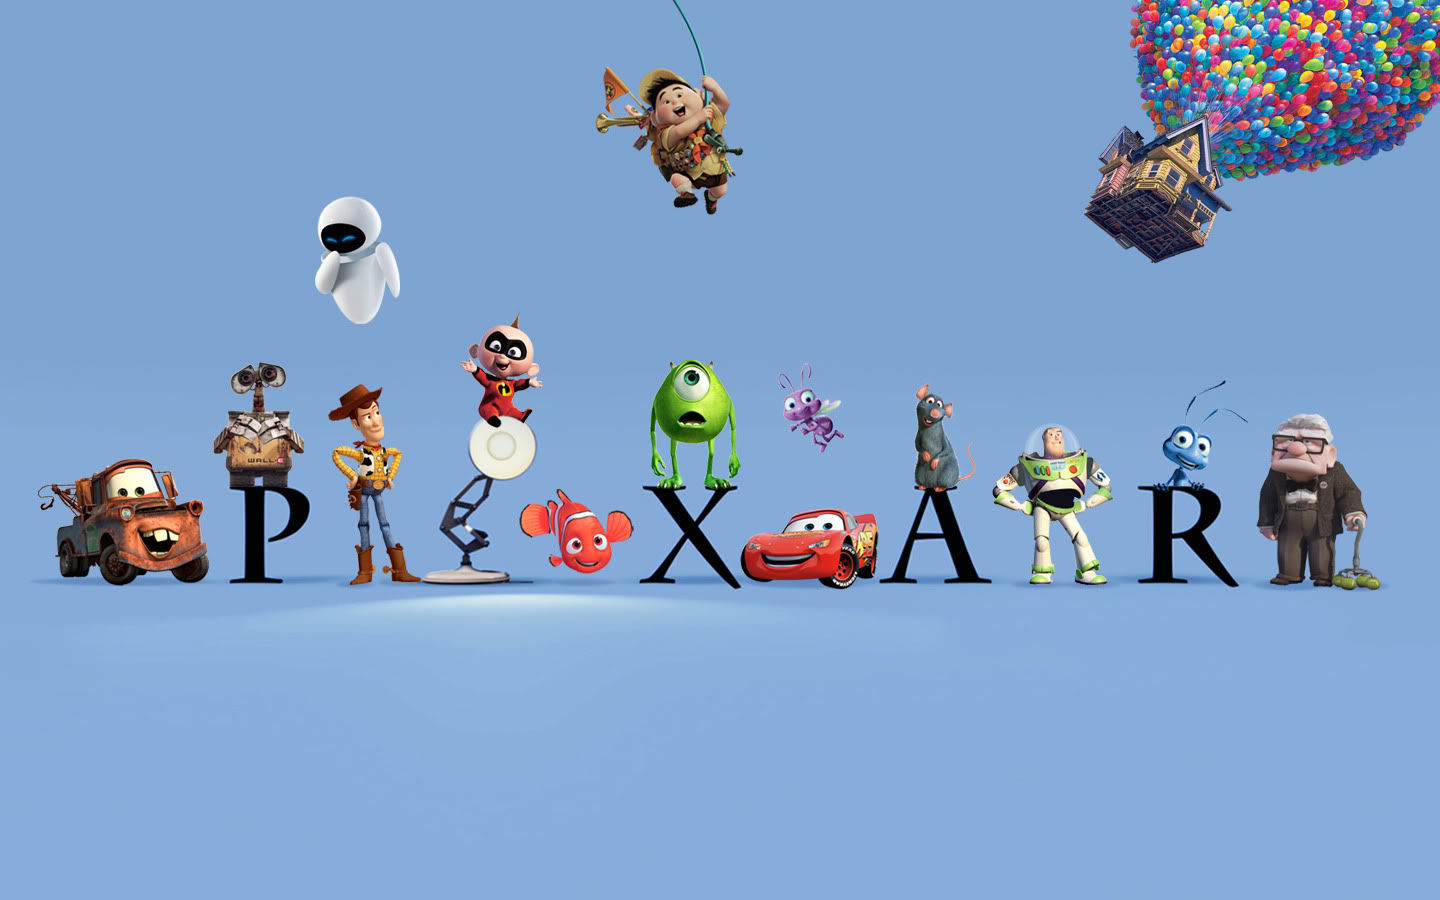 8434 - ¿Cuánto sabes de Pixar?